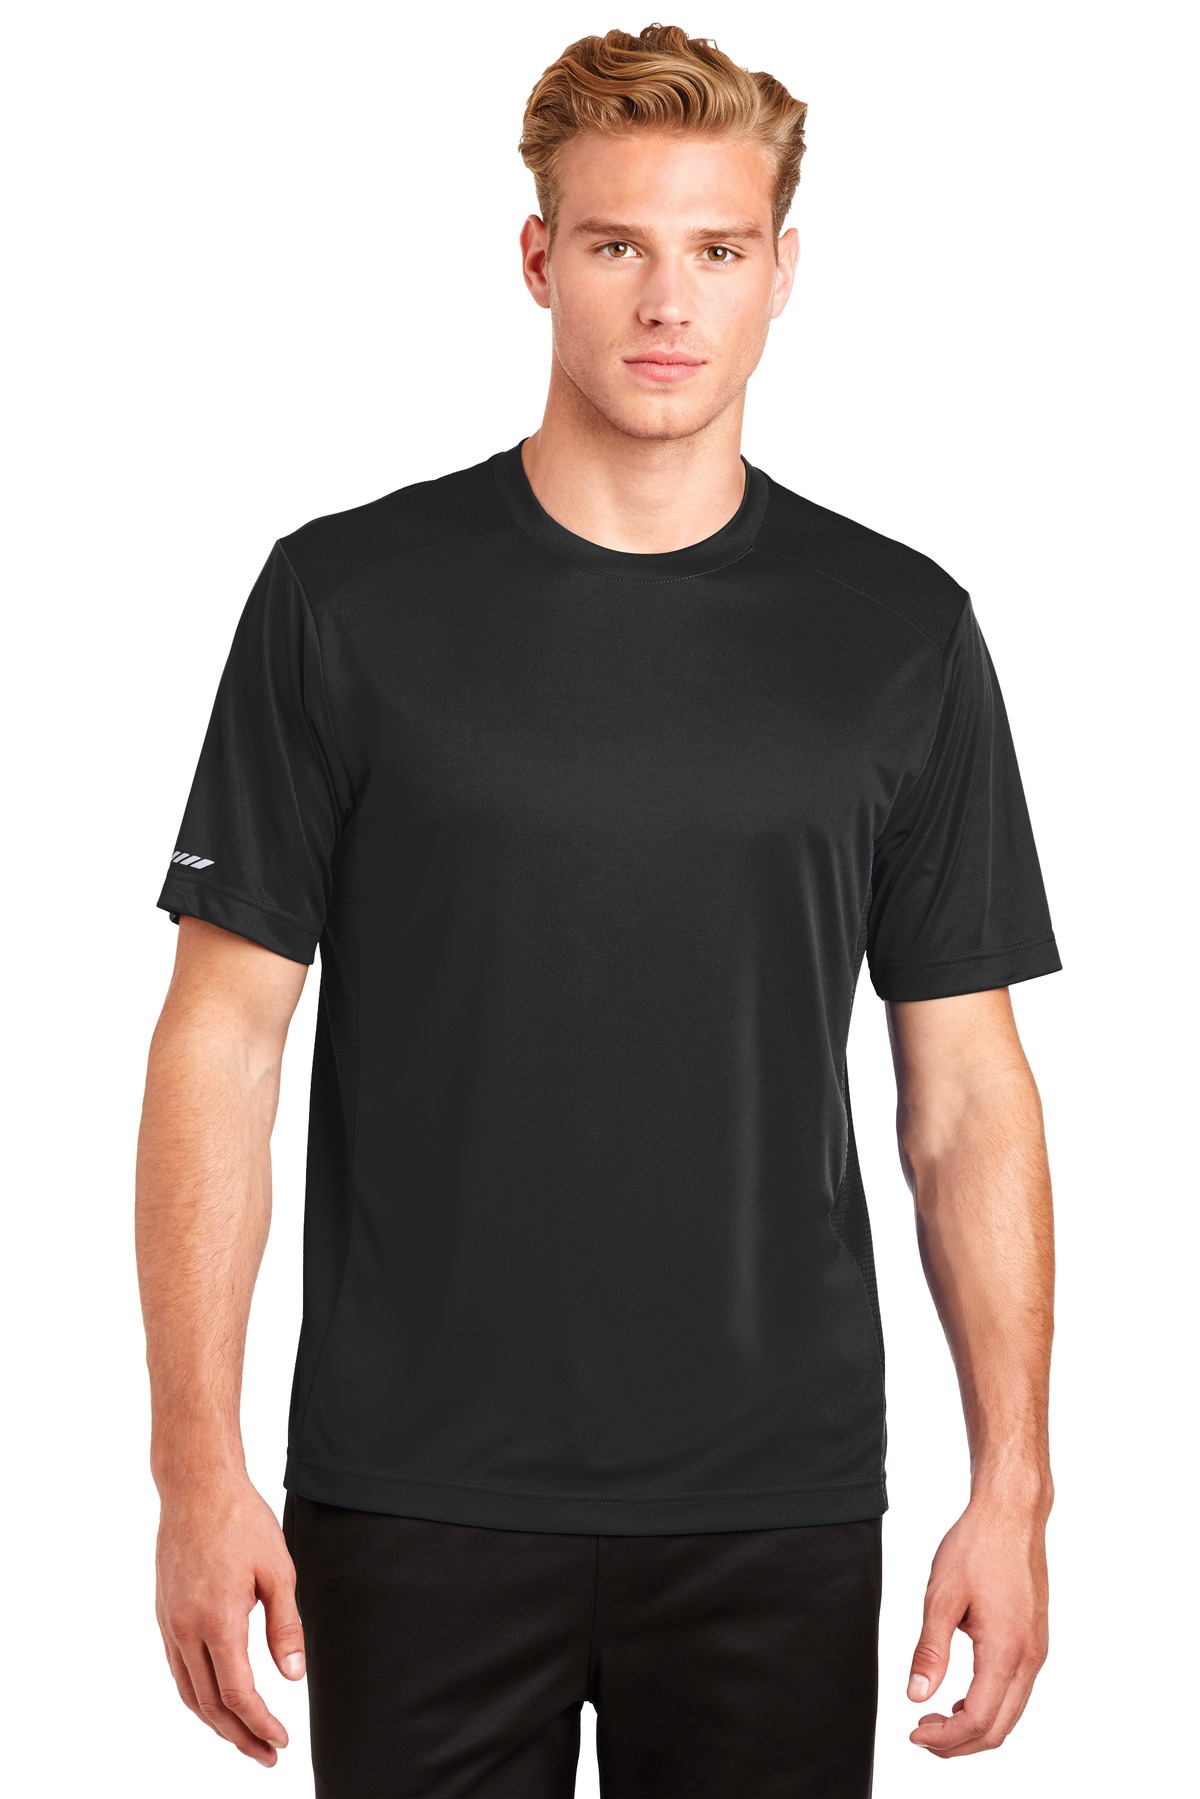 Sport-Tek Activewear T-Shirts for Hospitality ® PosiCharge® Elevate Tee.-Sport-Tek